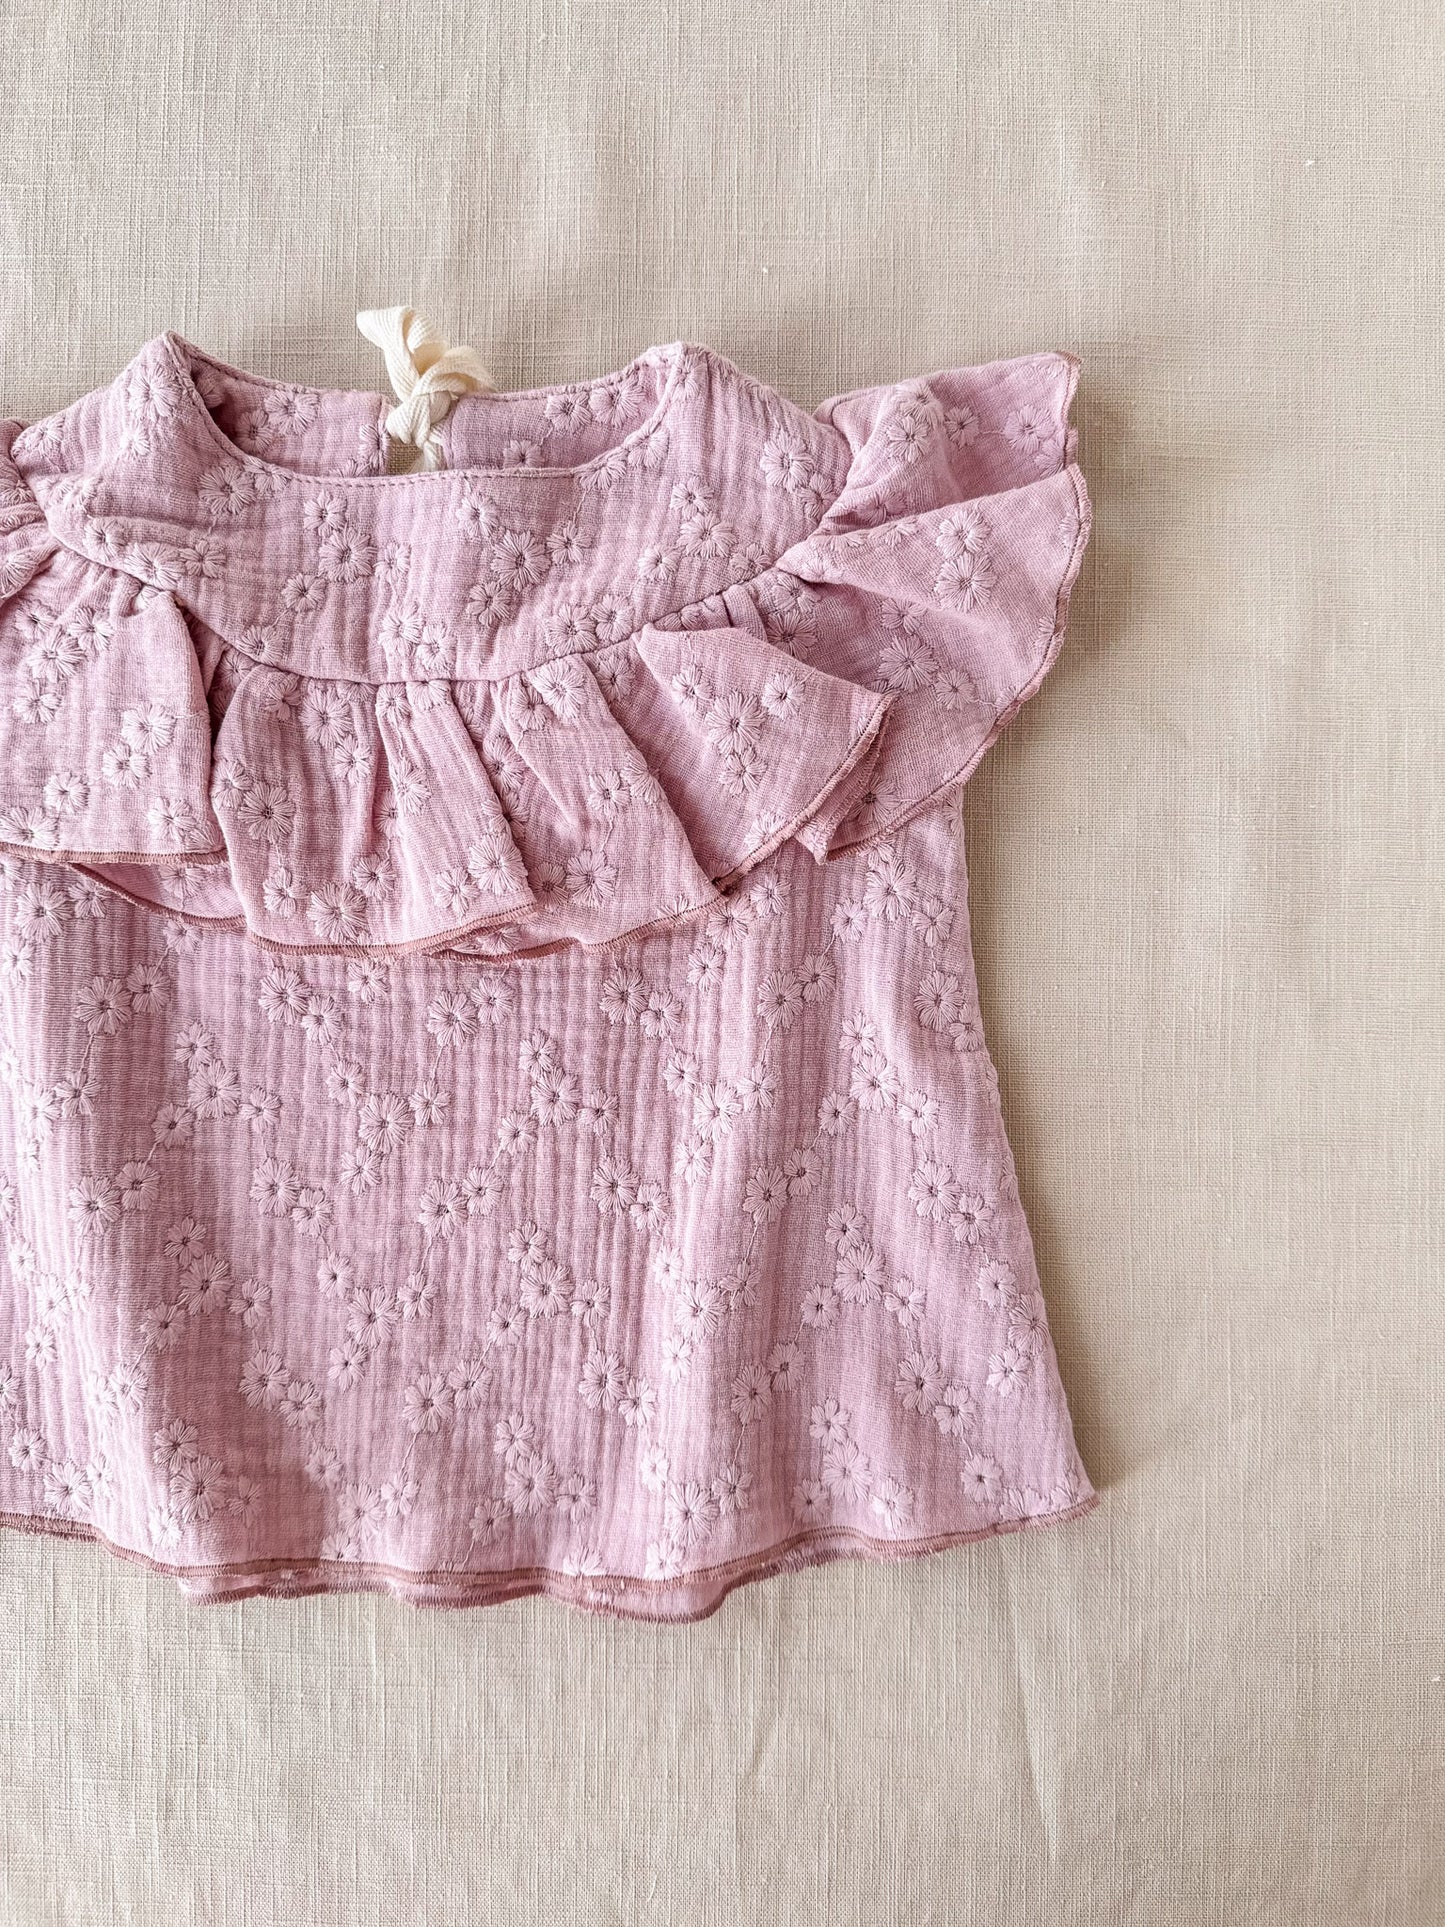 Naya baby dress / embroidered blush